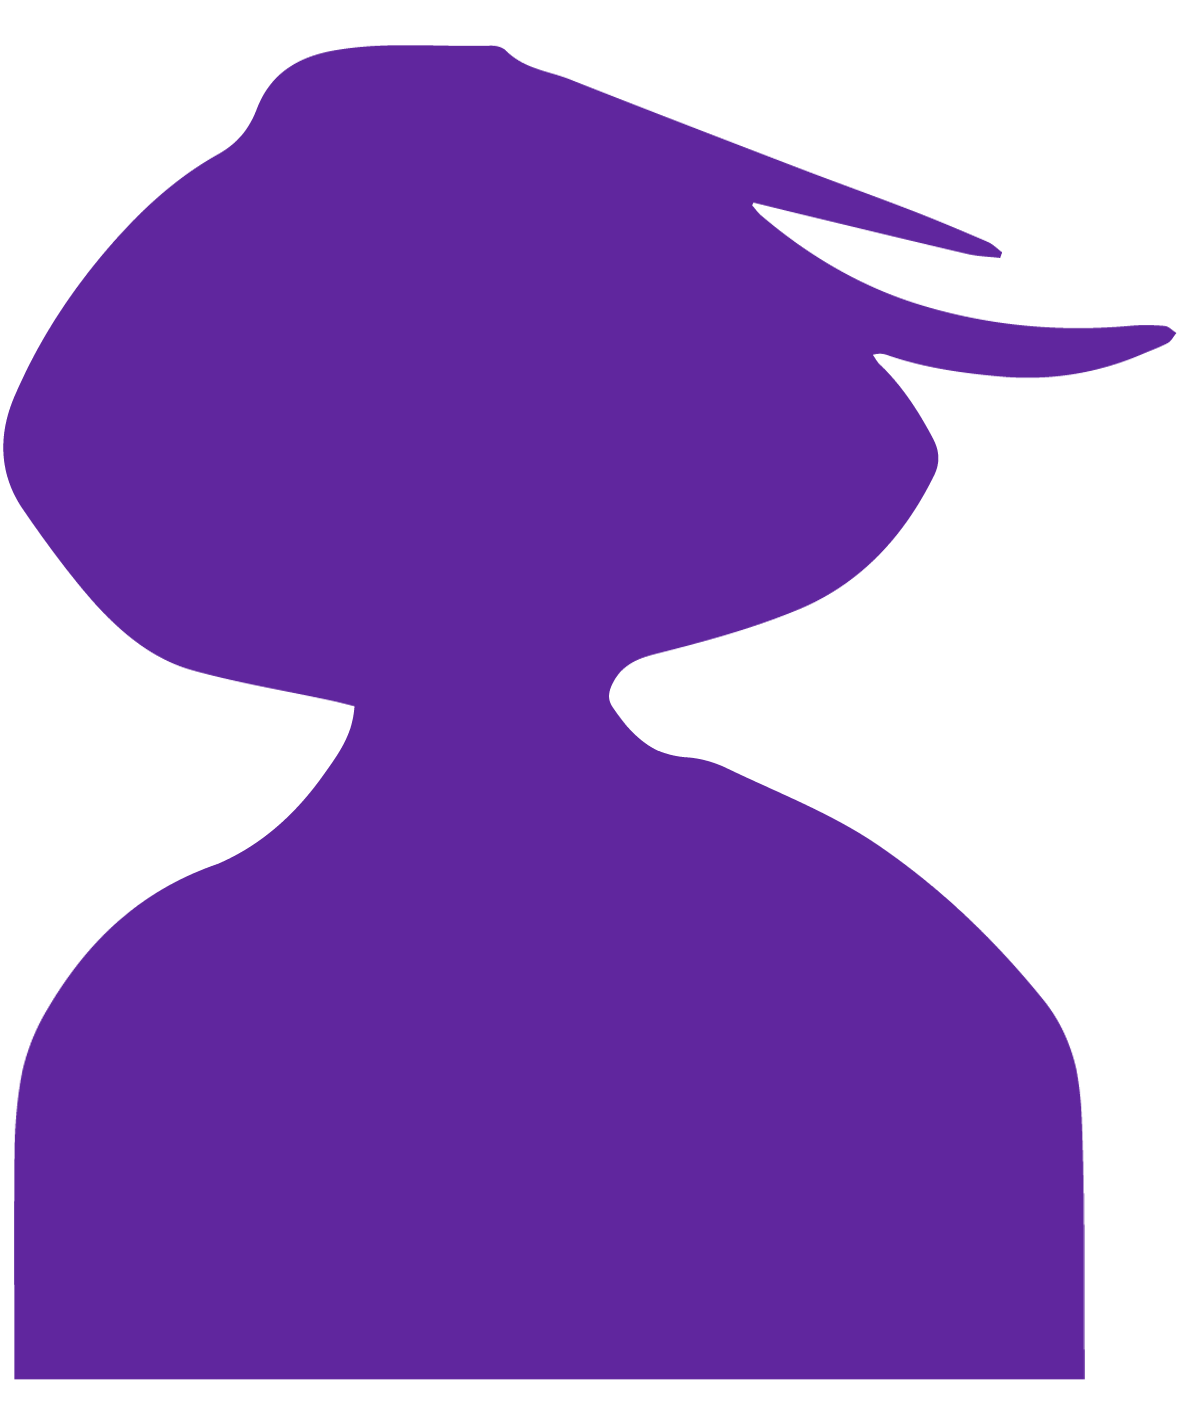 Purple silhouette of Frances Gordon